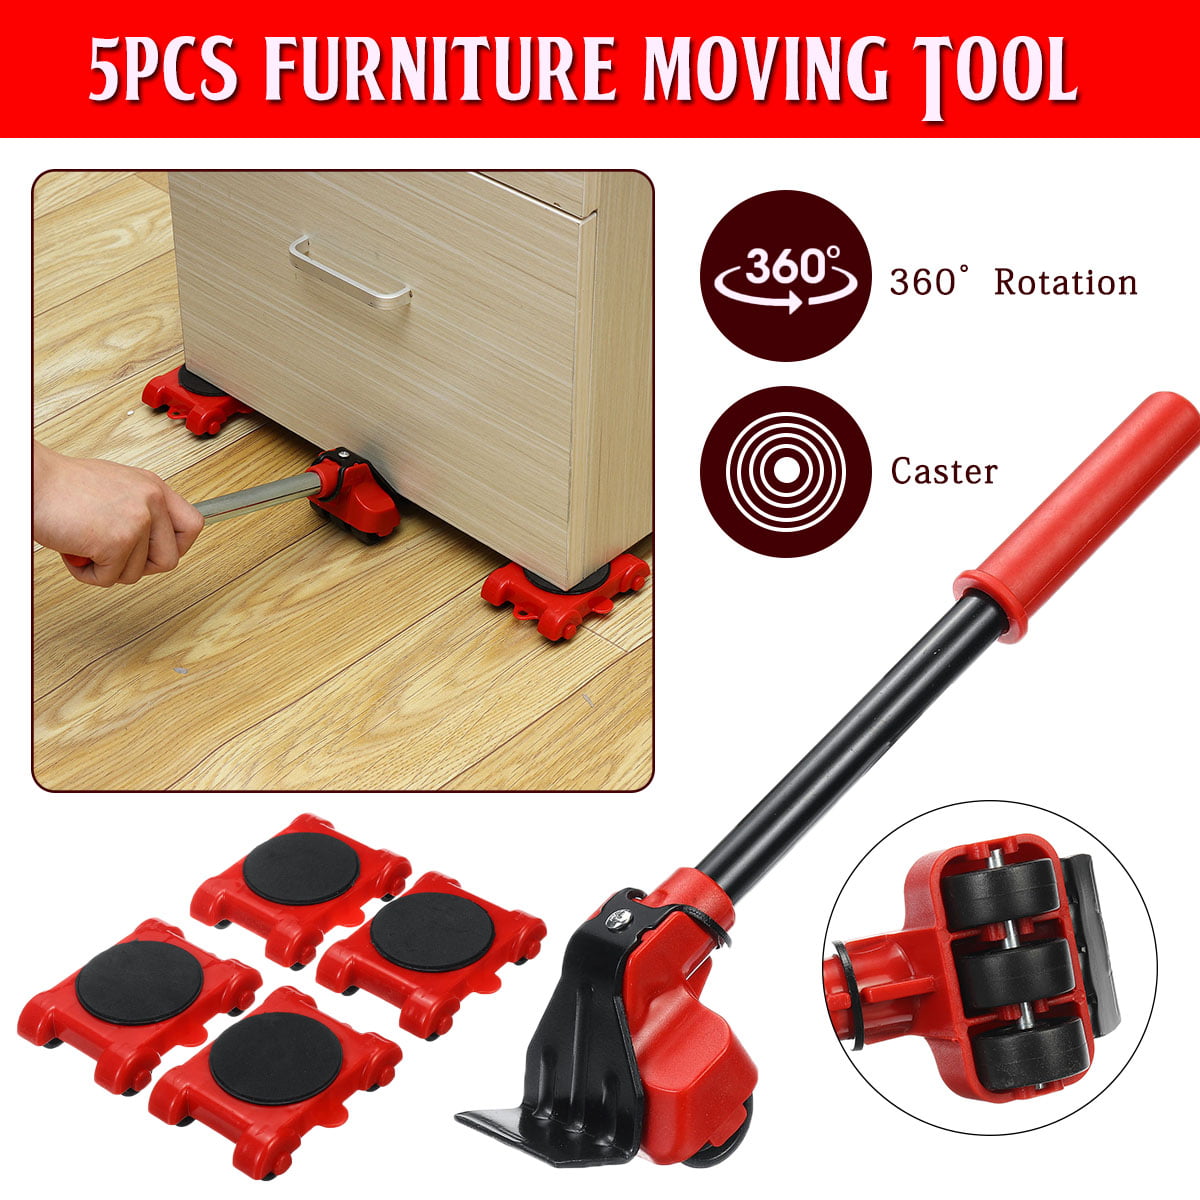 Sedeta Furniture Slider 5pcs Moves Furniture Tool Moves Furniture Lifter with 4 Furniture Moving Dolly Wheel 